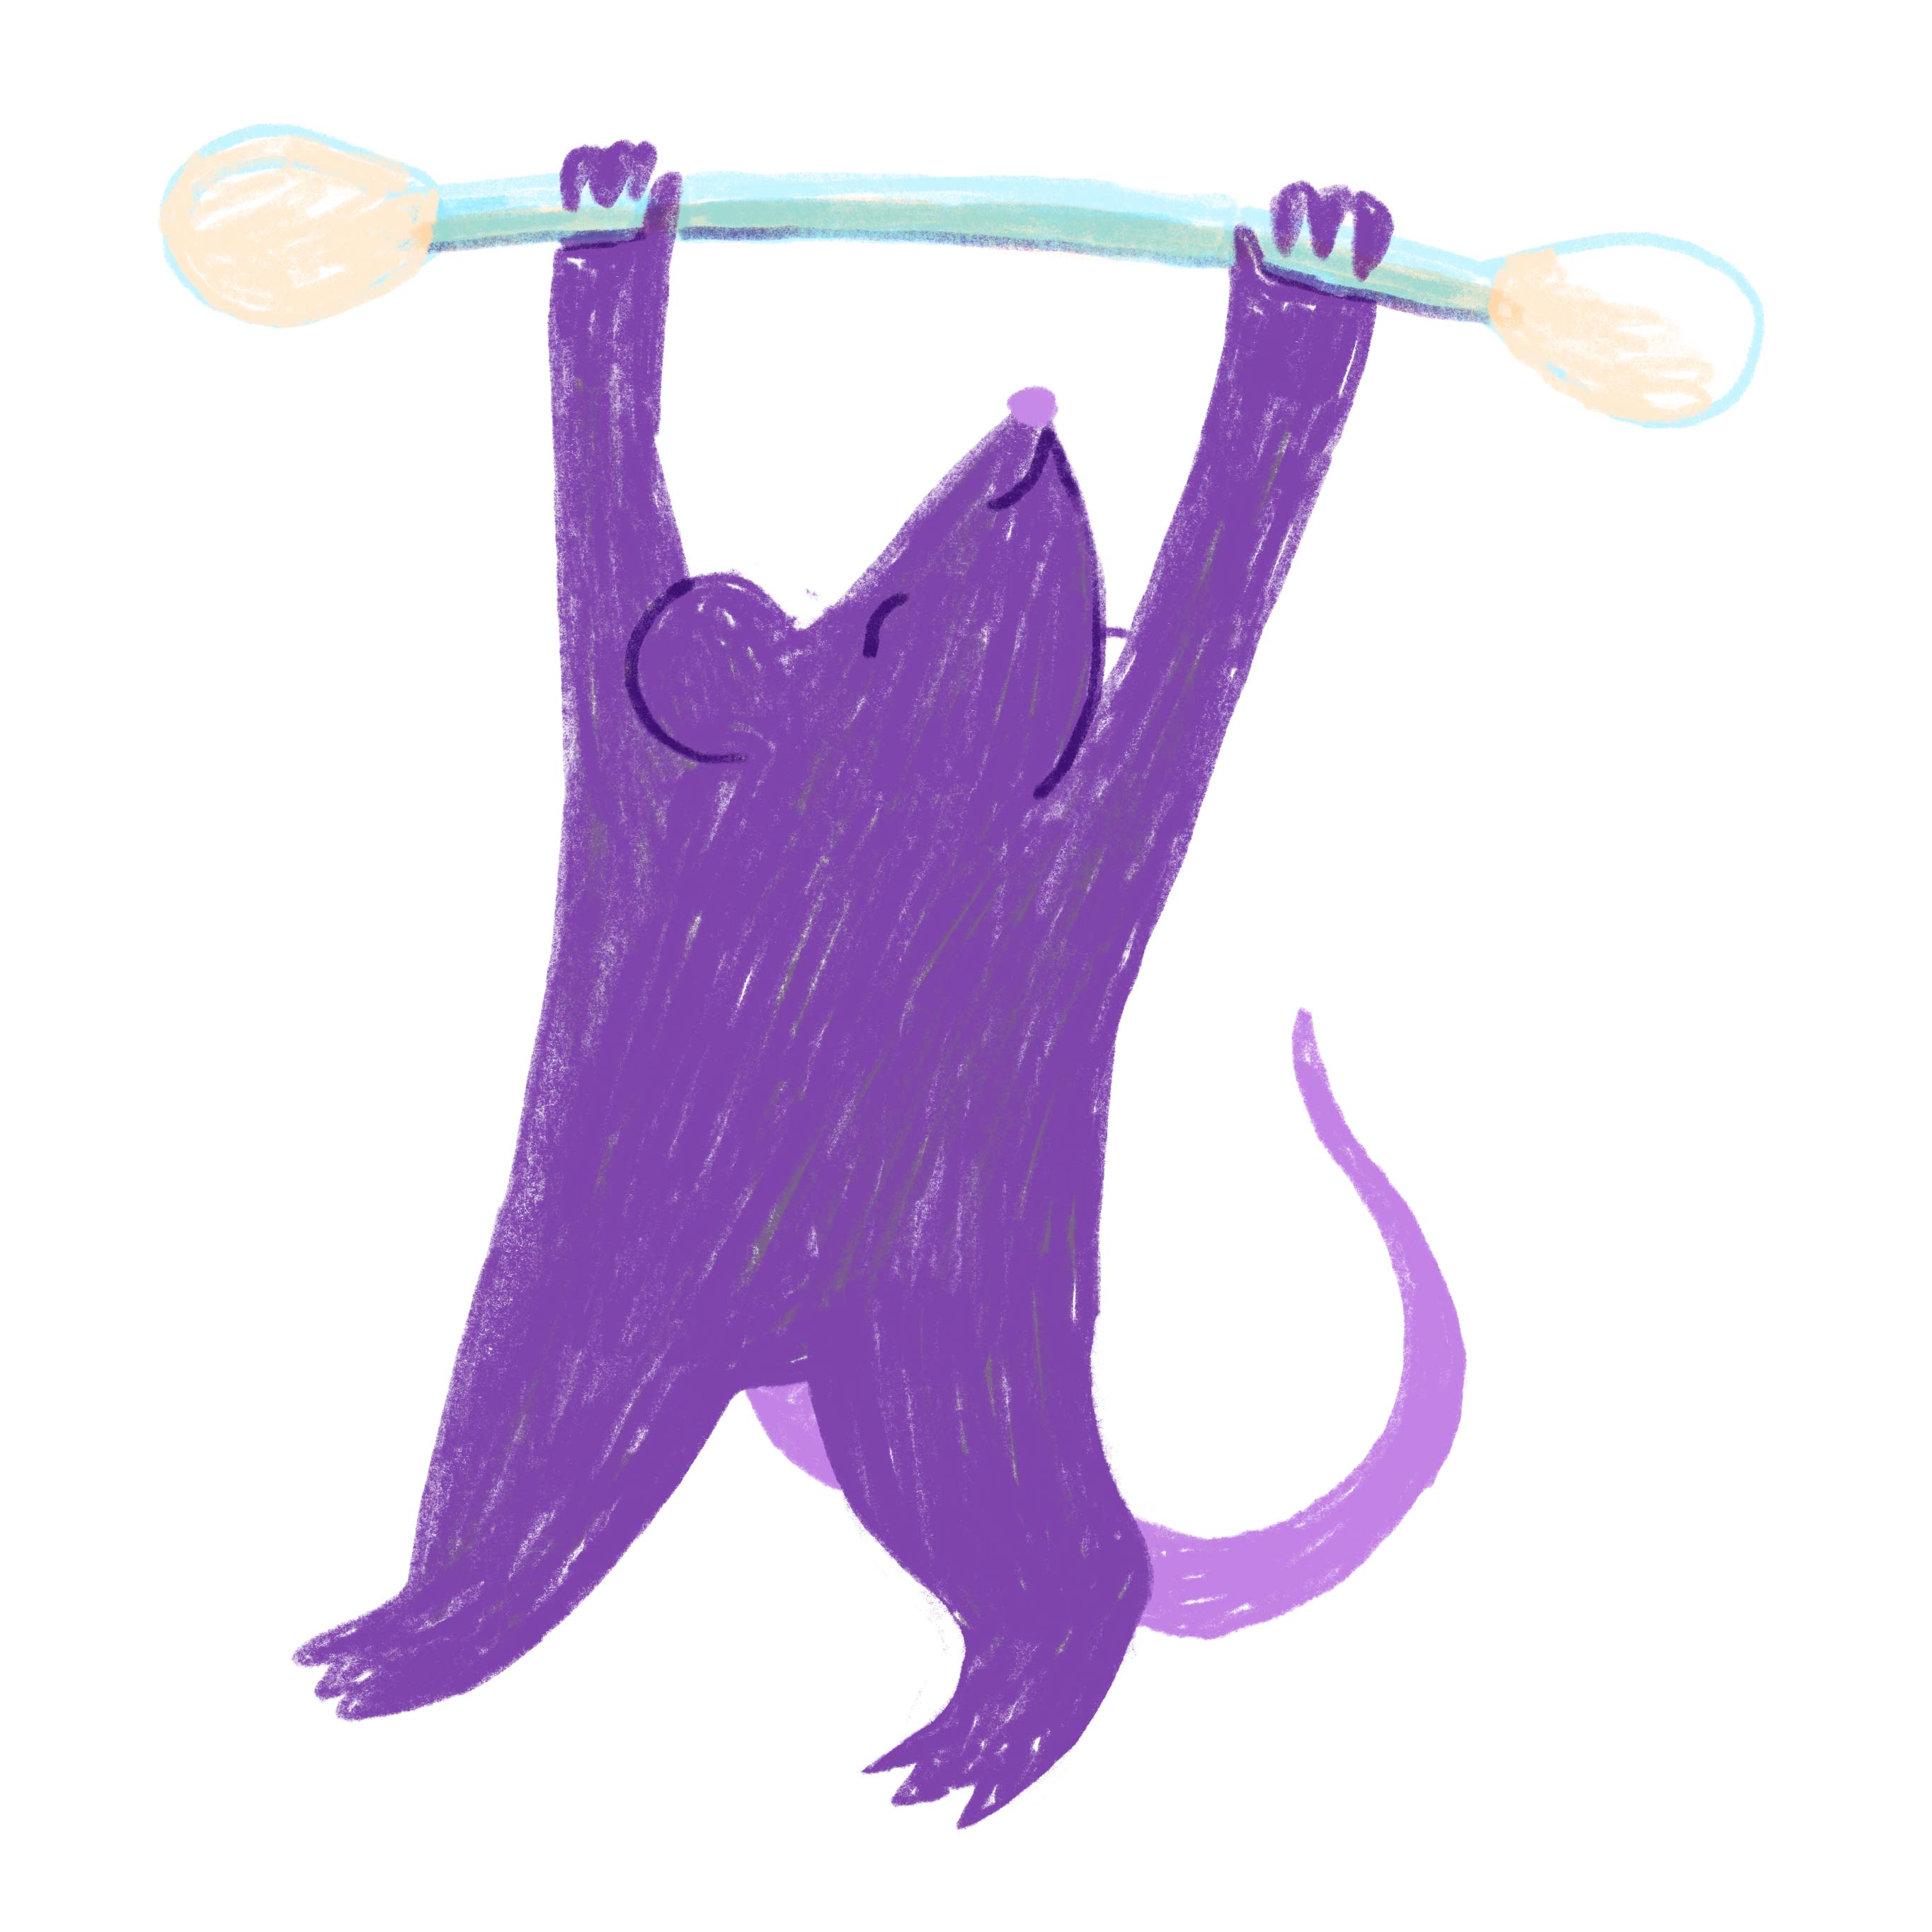 A purple rat hoists a Q-tip above its head.